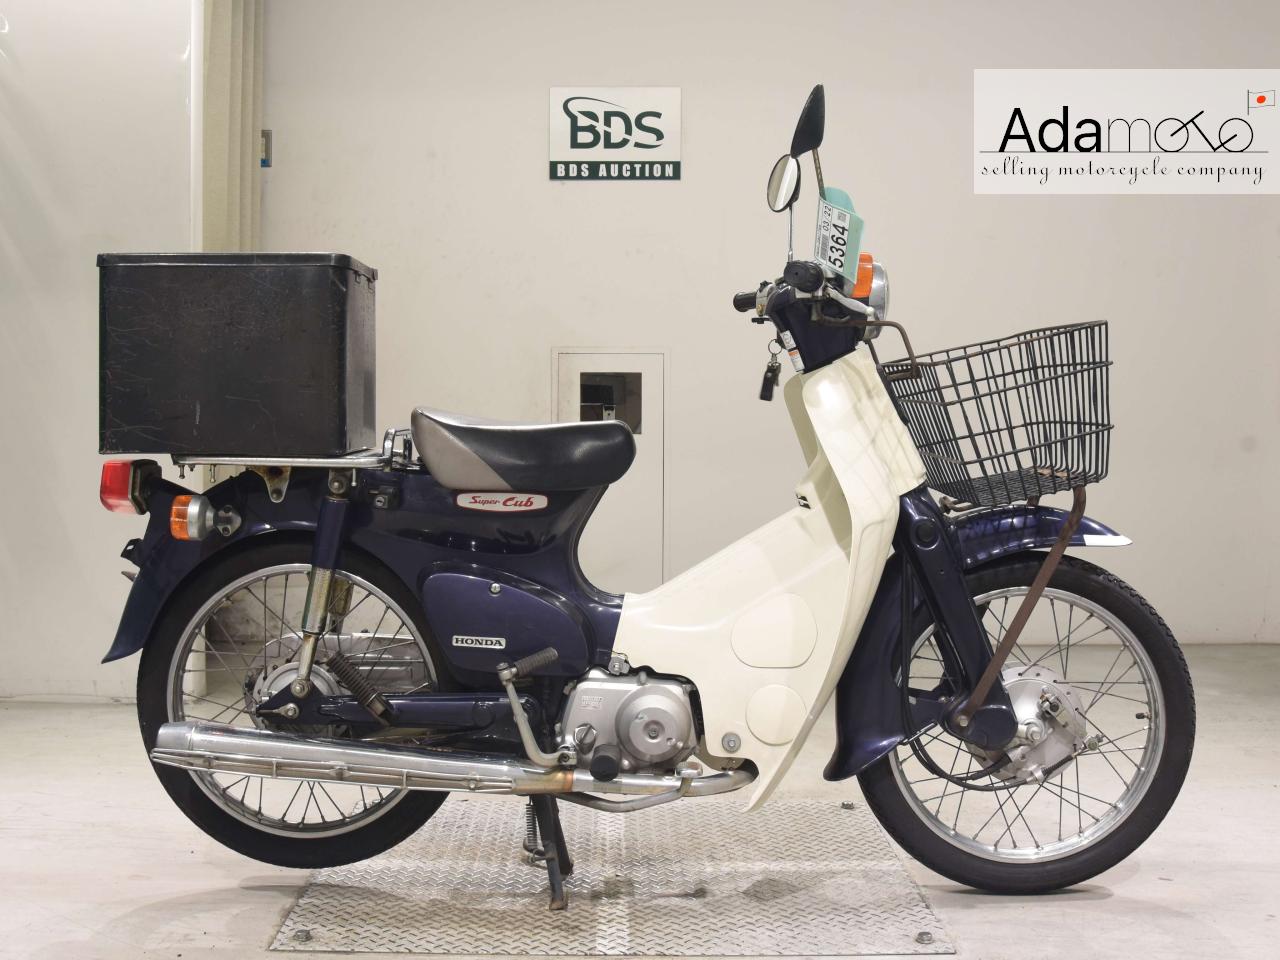 Honda C90 - Adamoto - Motorcycles from Japan